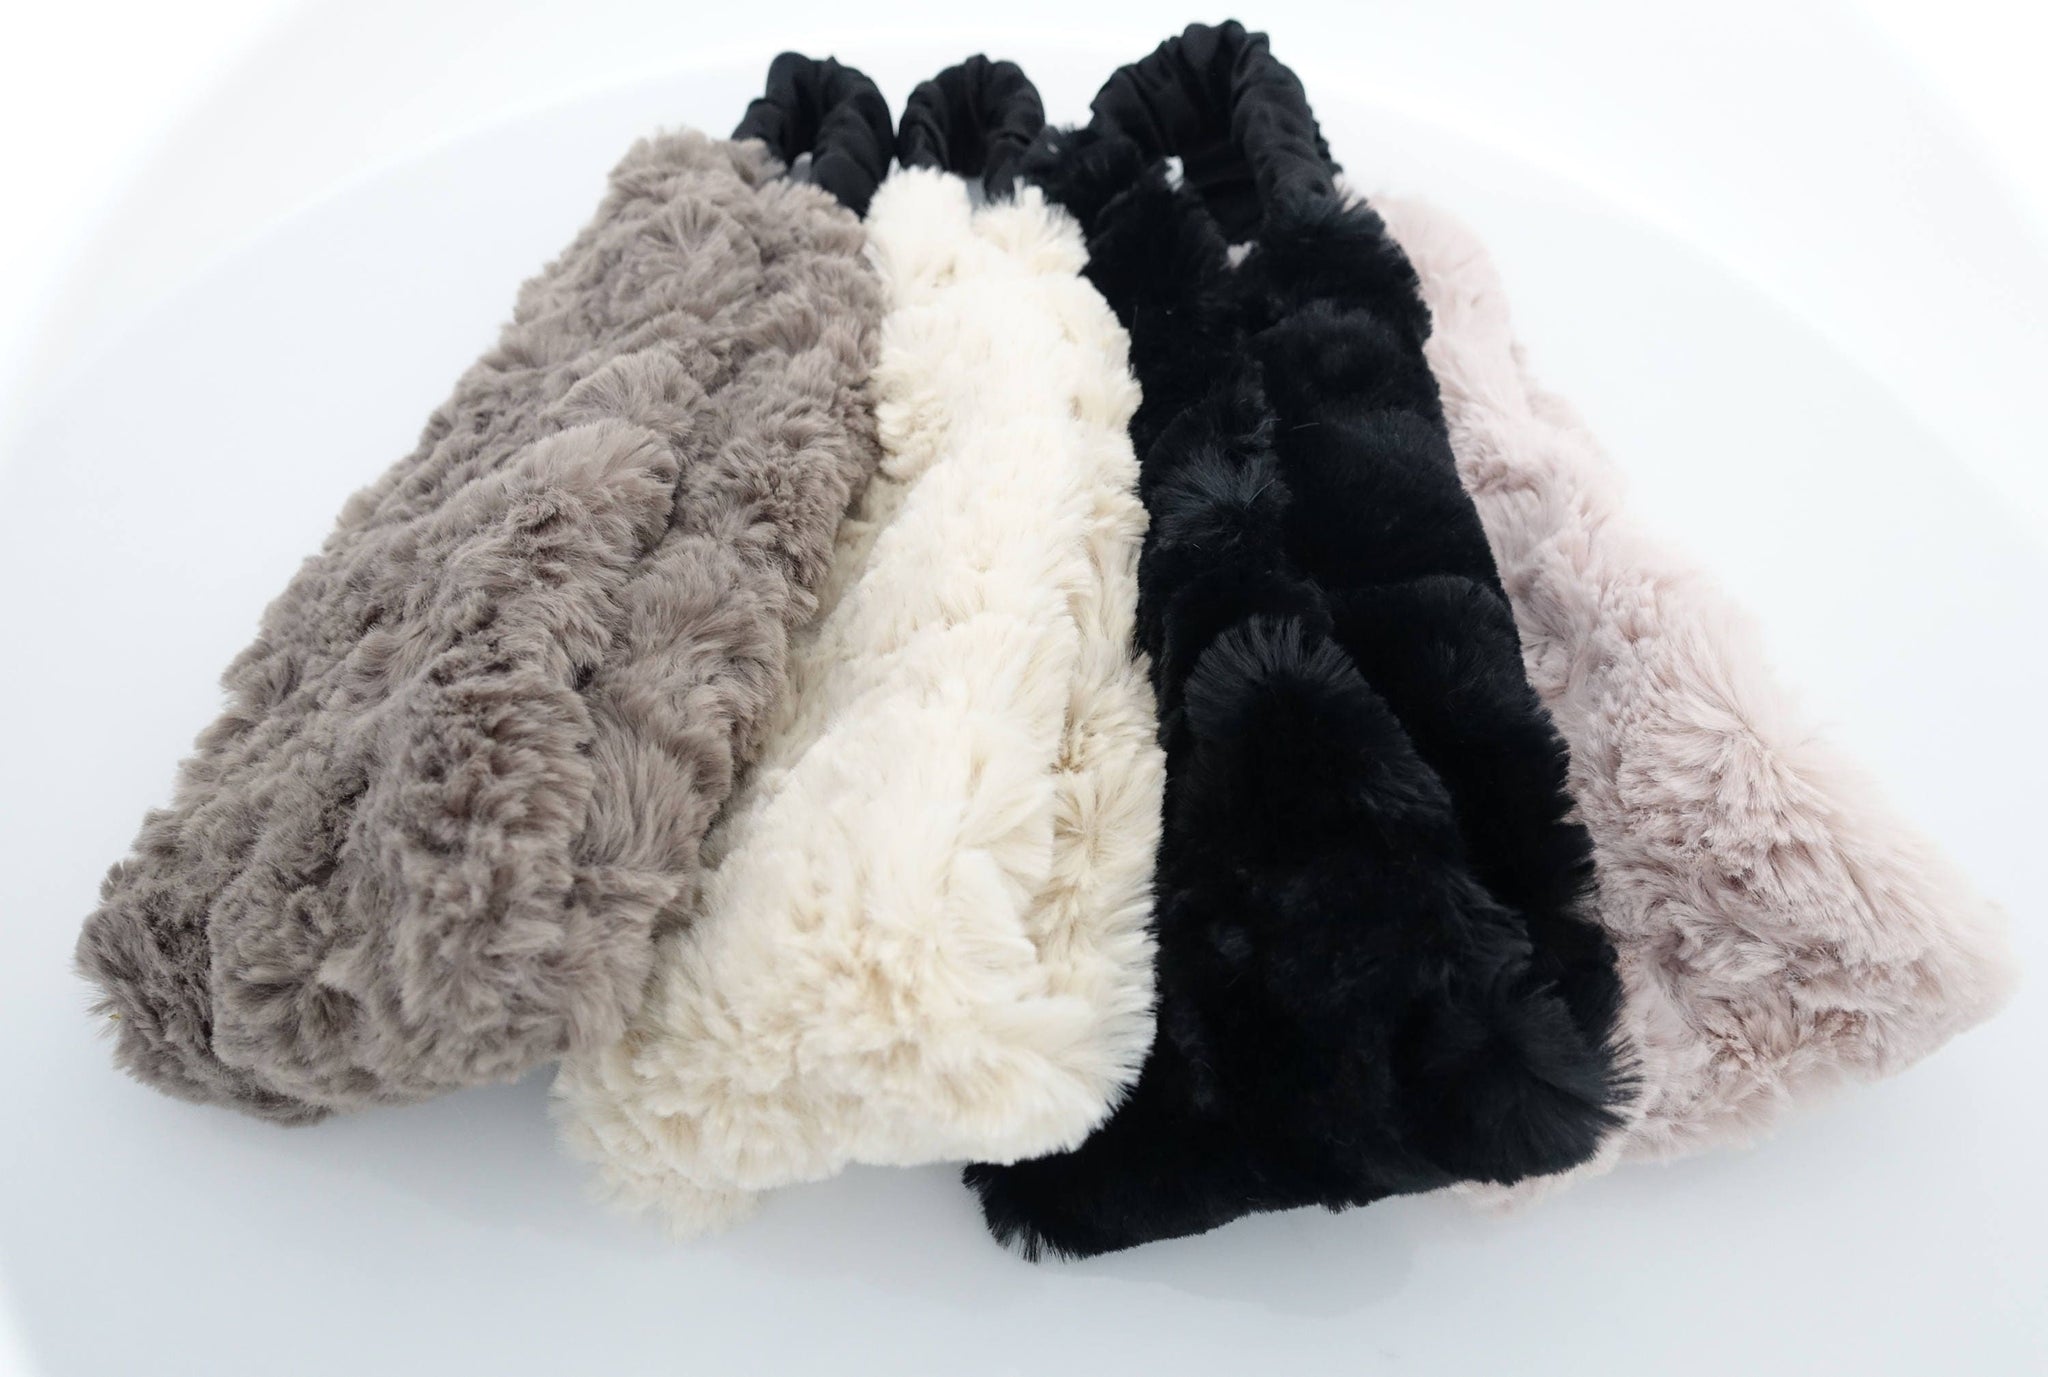 veryshine.com Headband Fabric Fur fashion headband Winter Fashion Hair turban Elastic Headband for Women